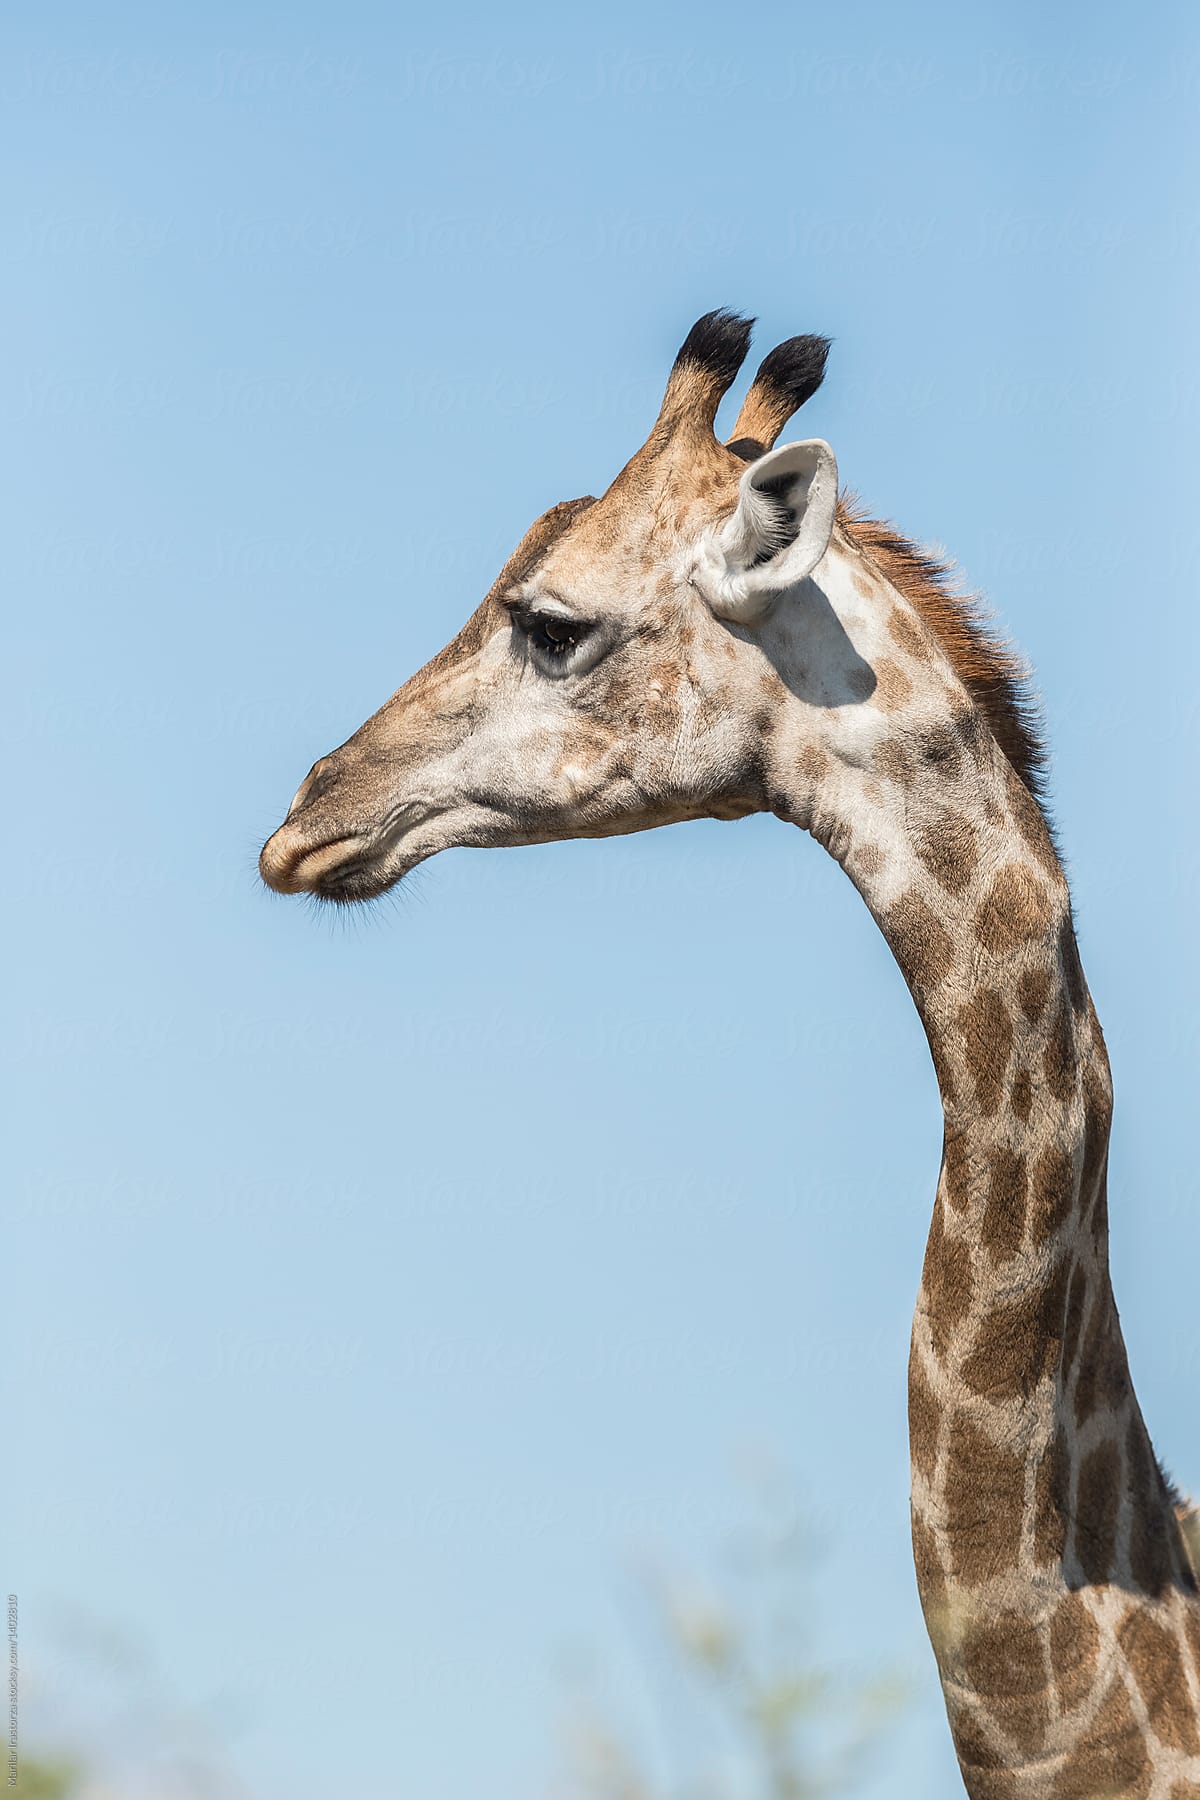 giraffe face side